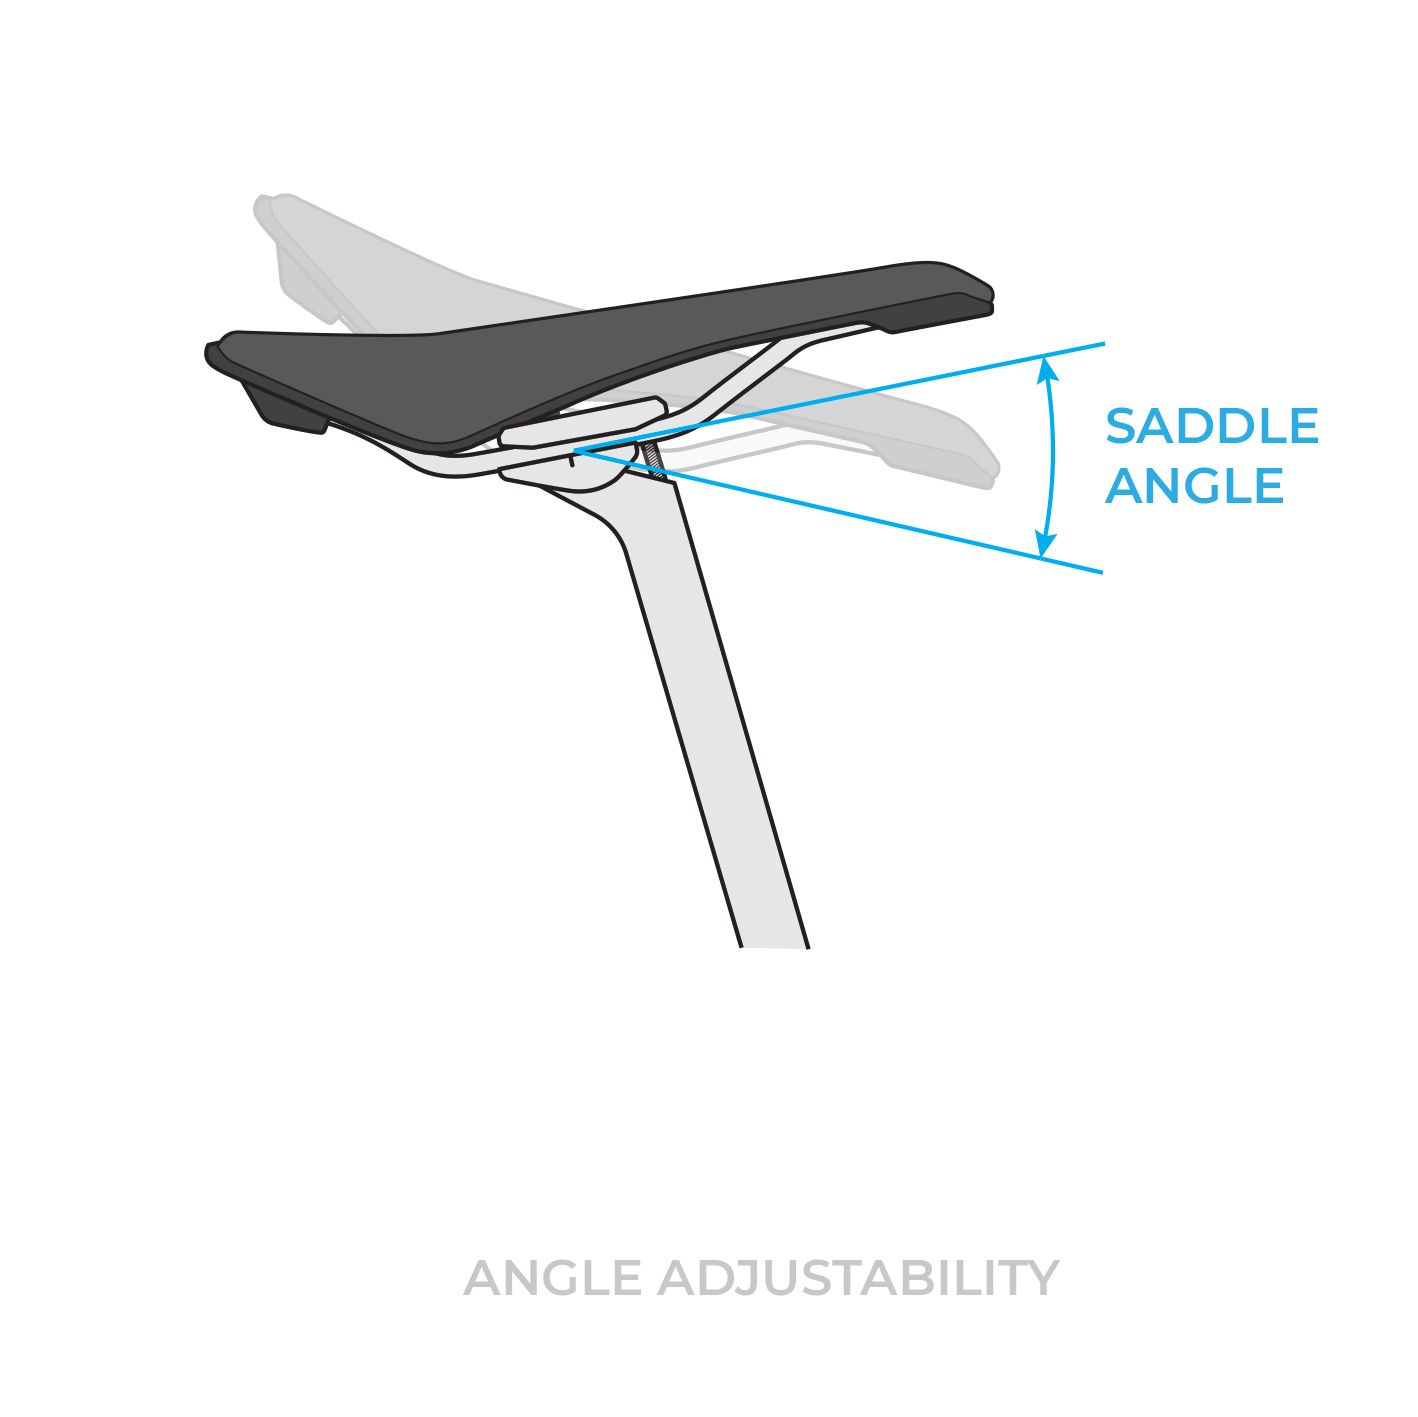 Angle adjustability